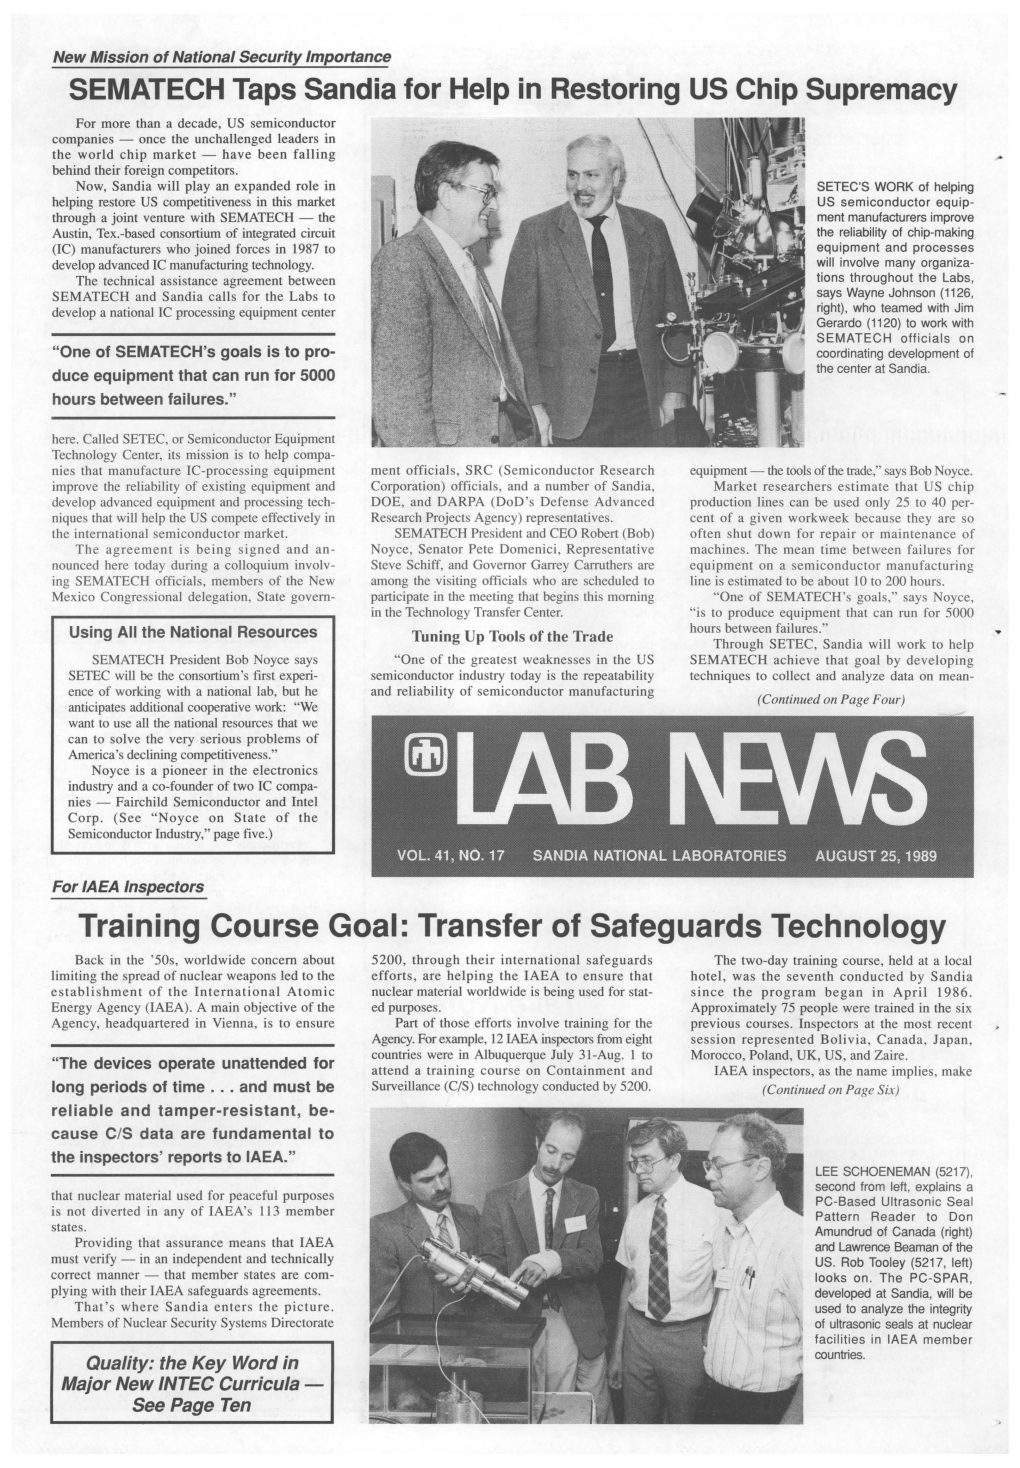 C1002 Lab News 08-25